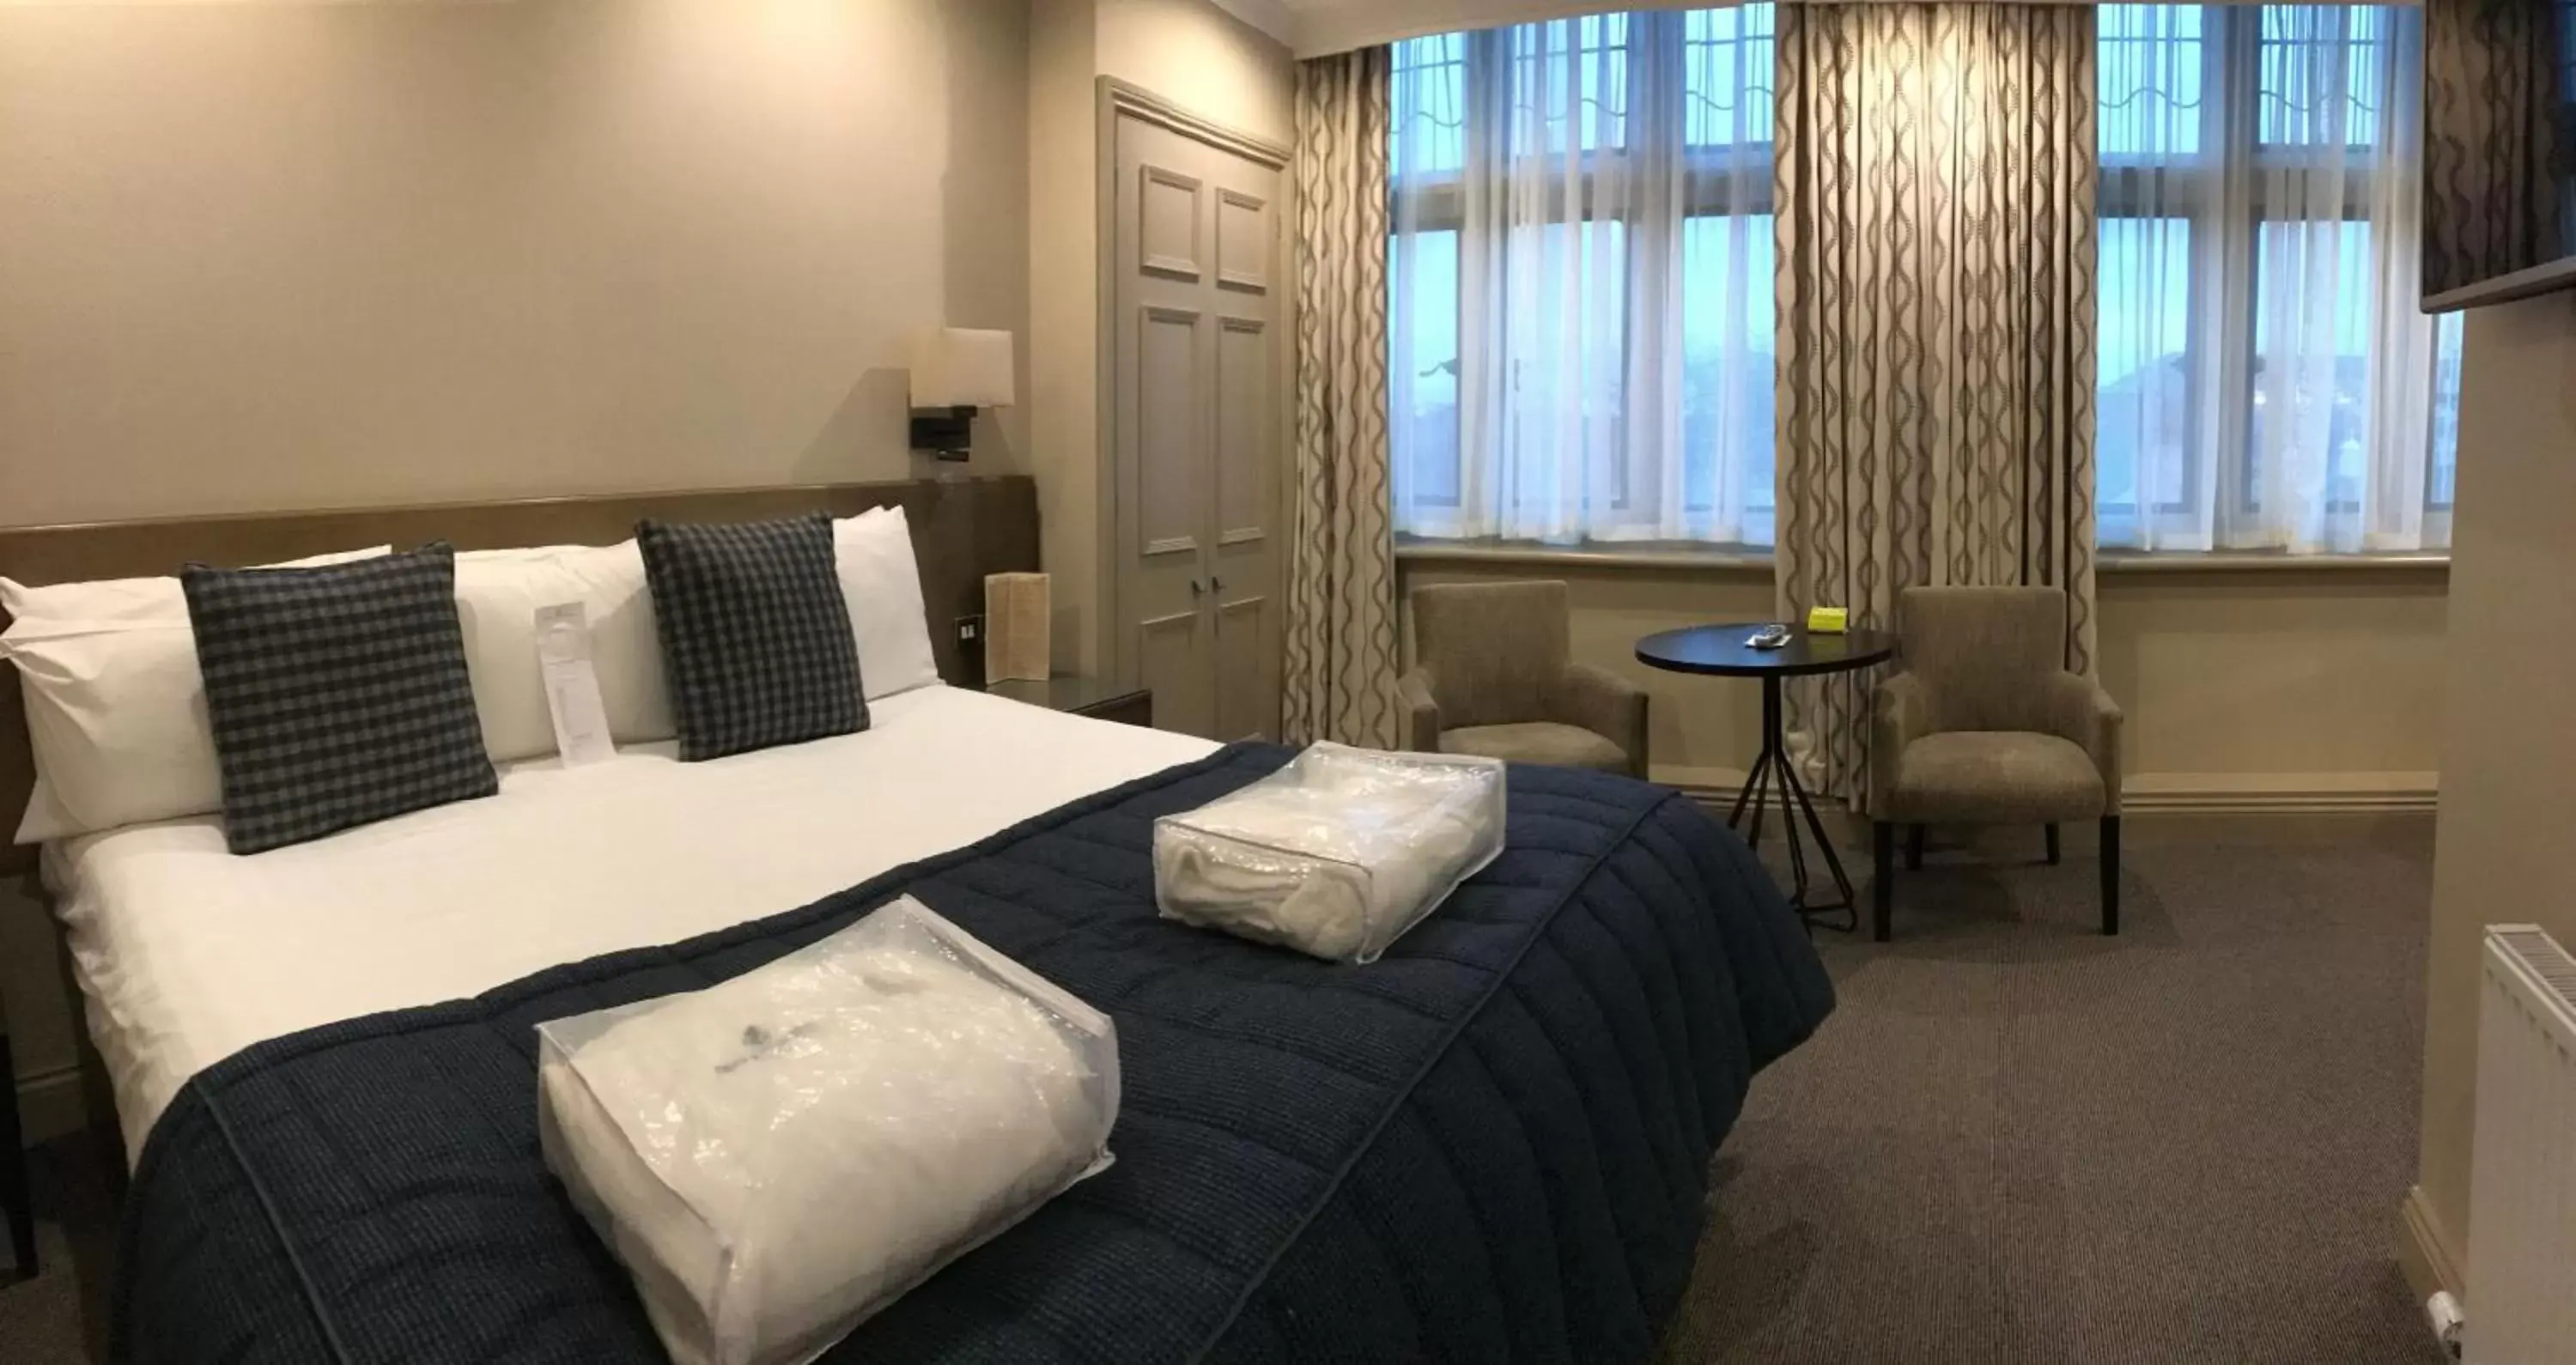 Shower, Bed in Crown & Mitre Hotel